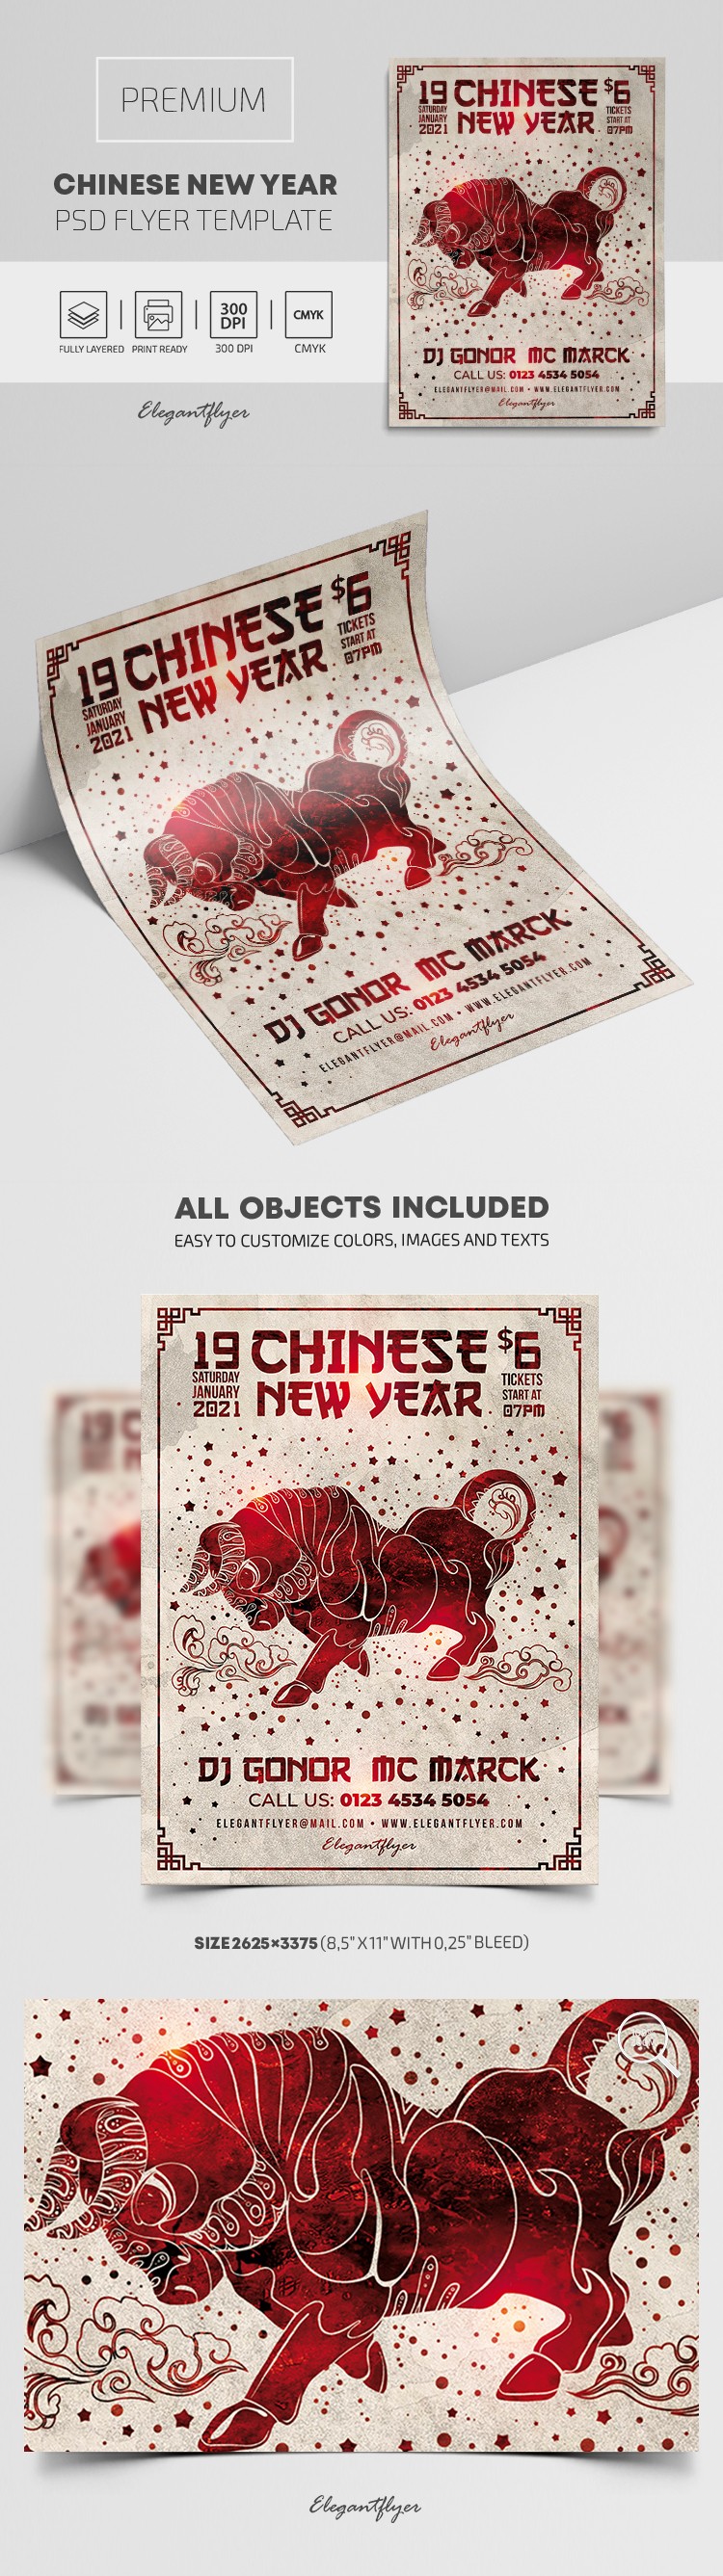 Dépliant du Nouvel An chinois by ElegantFlyer